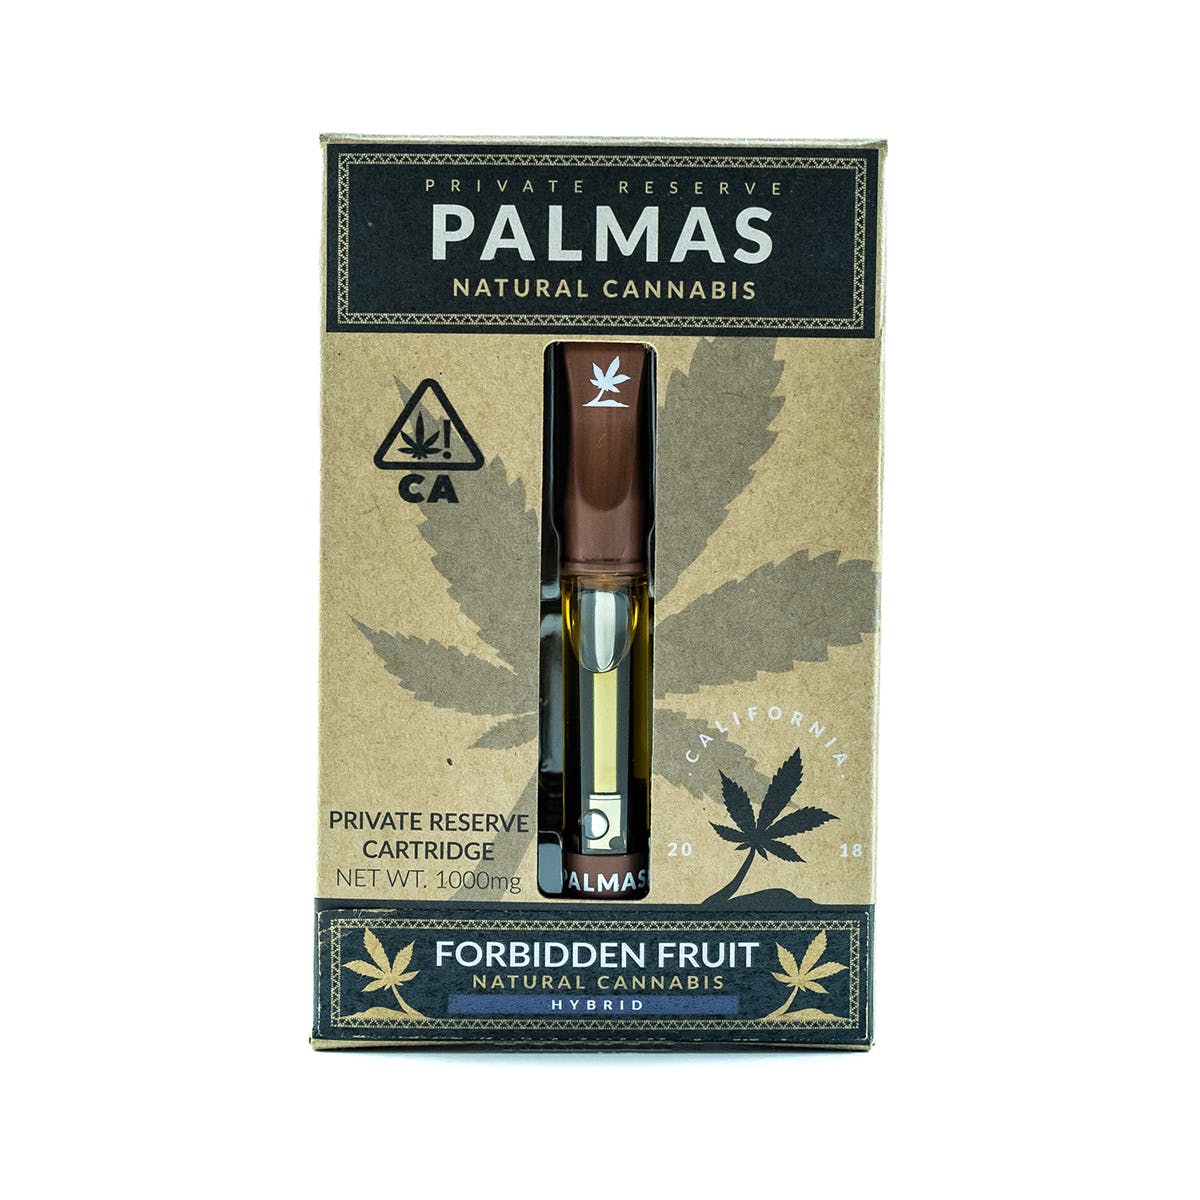 marijuana-dispensaries-crenshaw-church-of-herbs-in-los-angeles-palmas-private-reserve-cartridge-forbidden-fruit